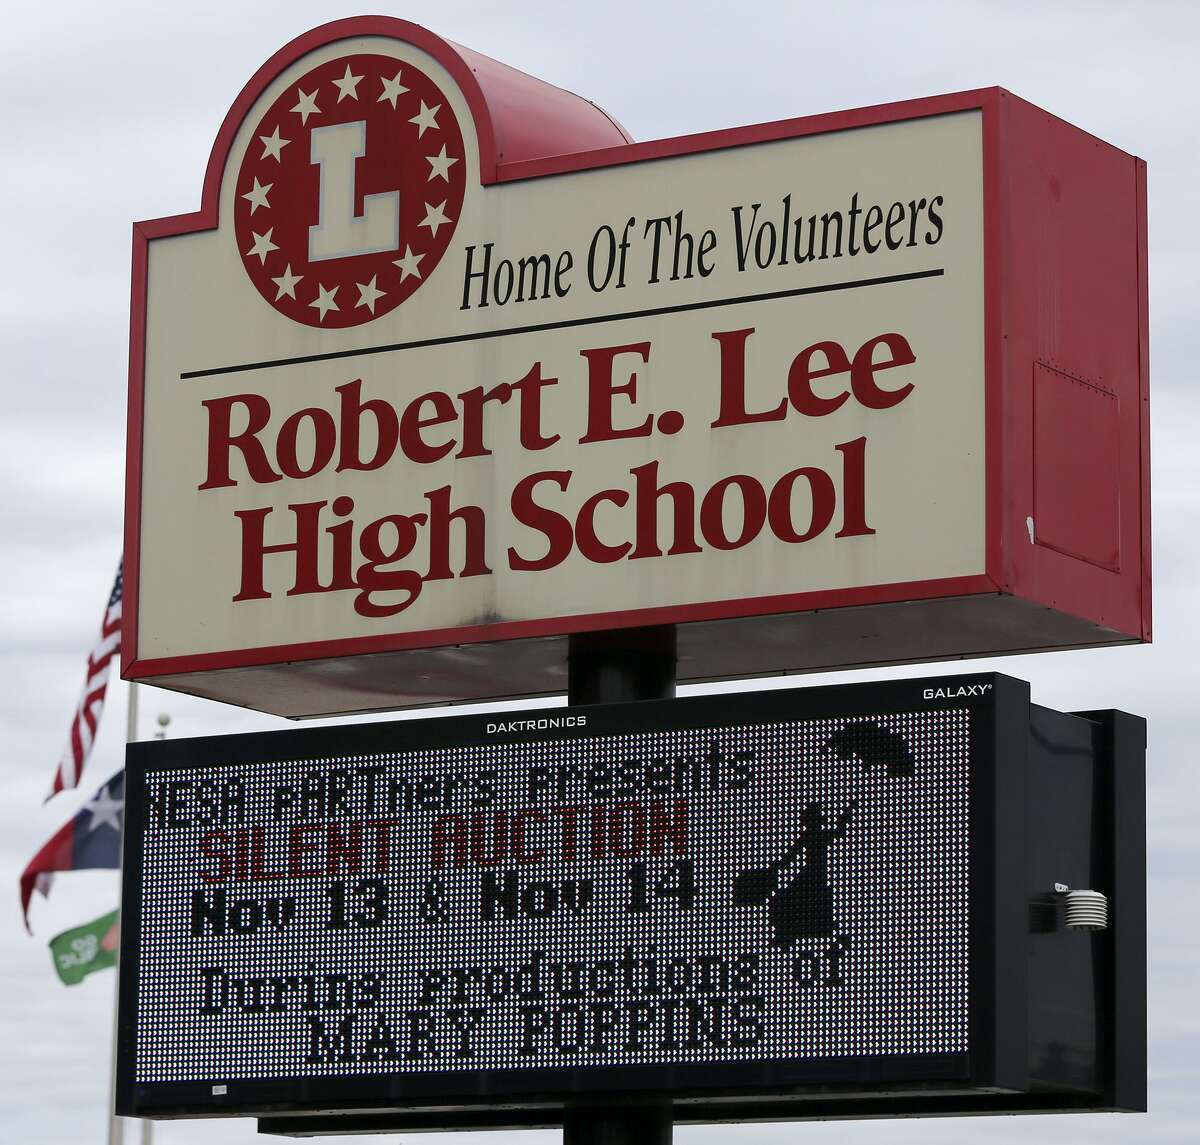 Robert E. Lee High School in San Antonio, Texas.